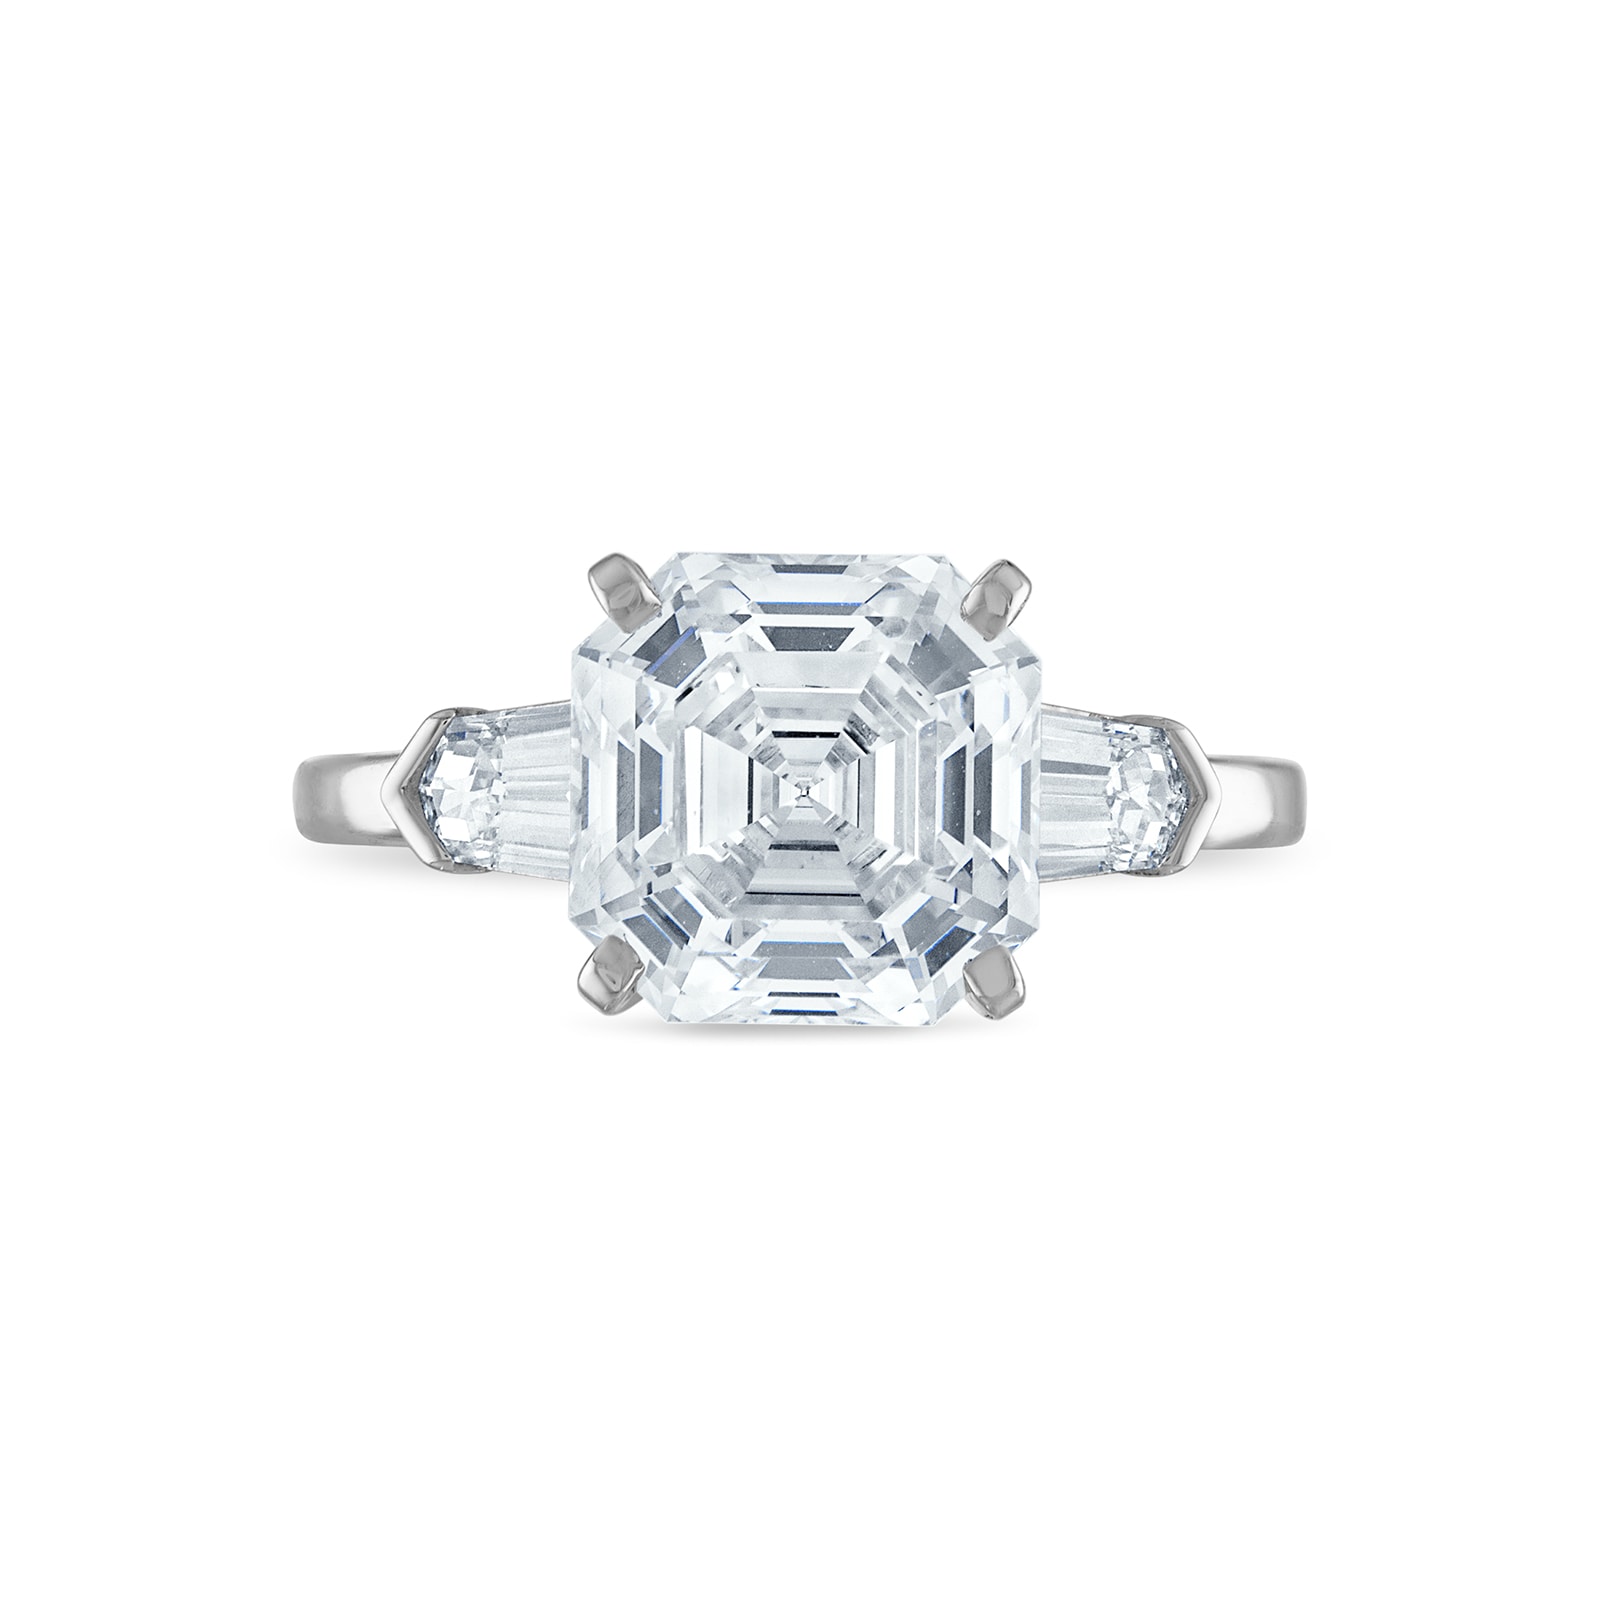 Designer Rings, Luxury Pearl & Diamond Rings for Her, Online & In Store US